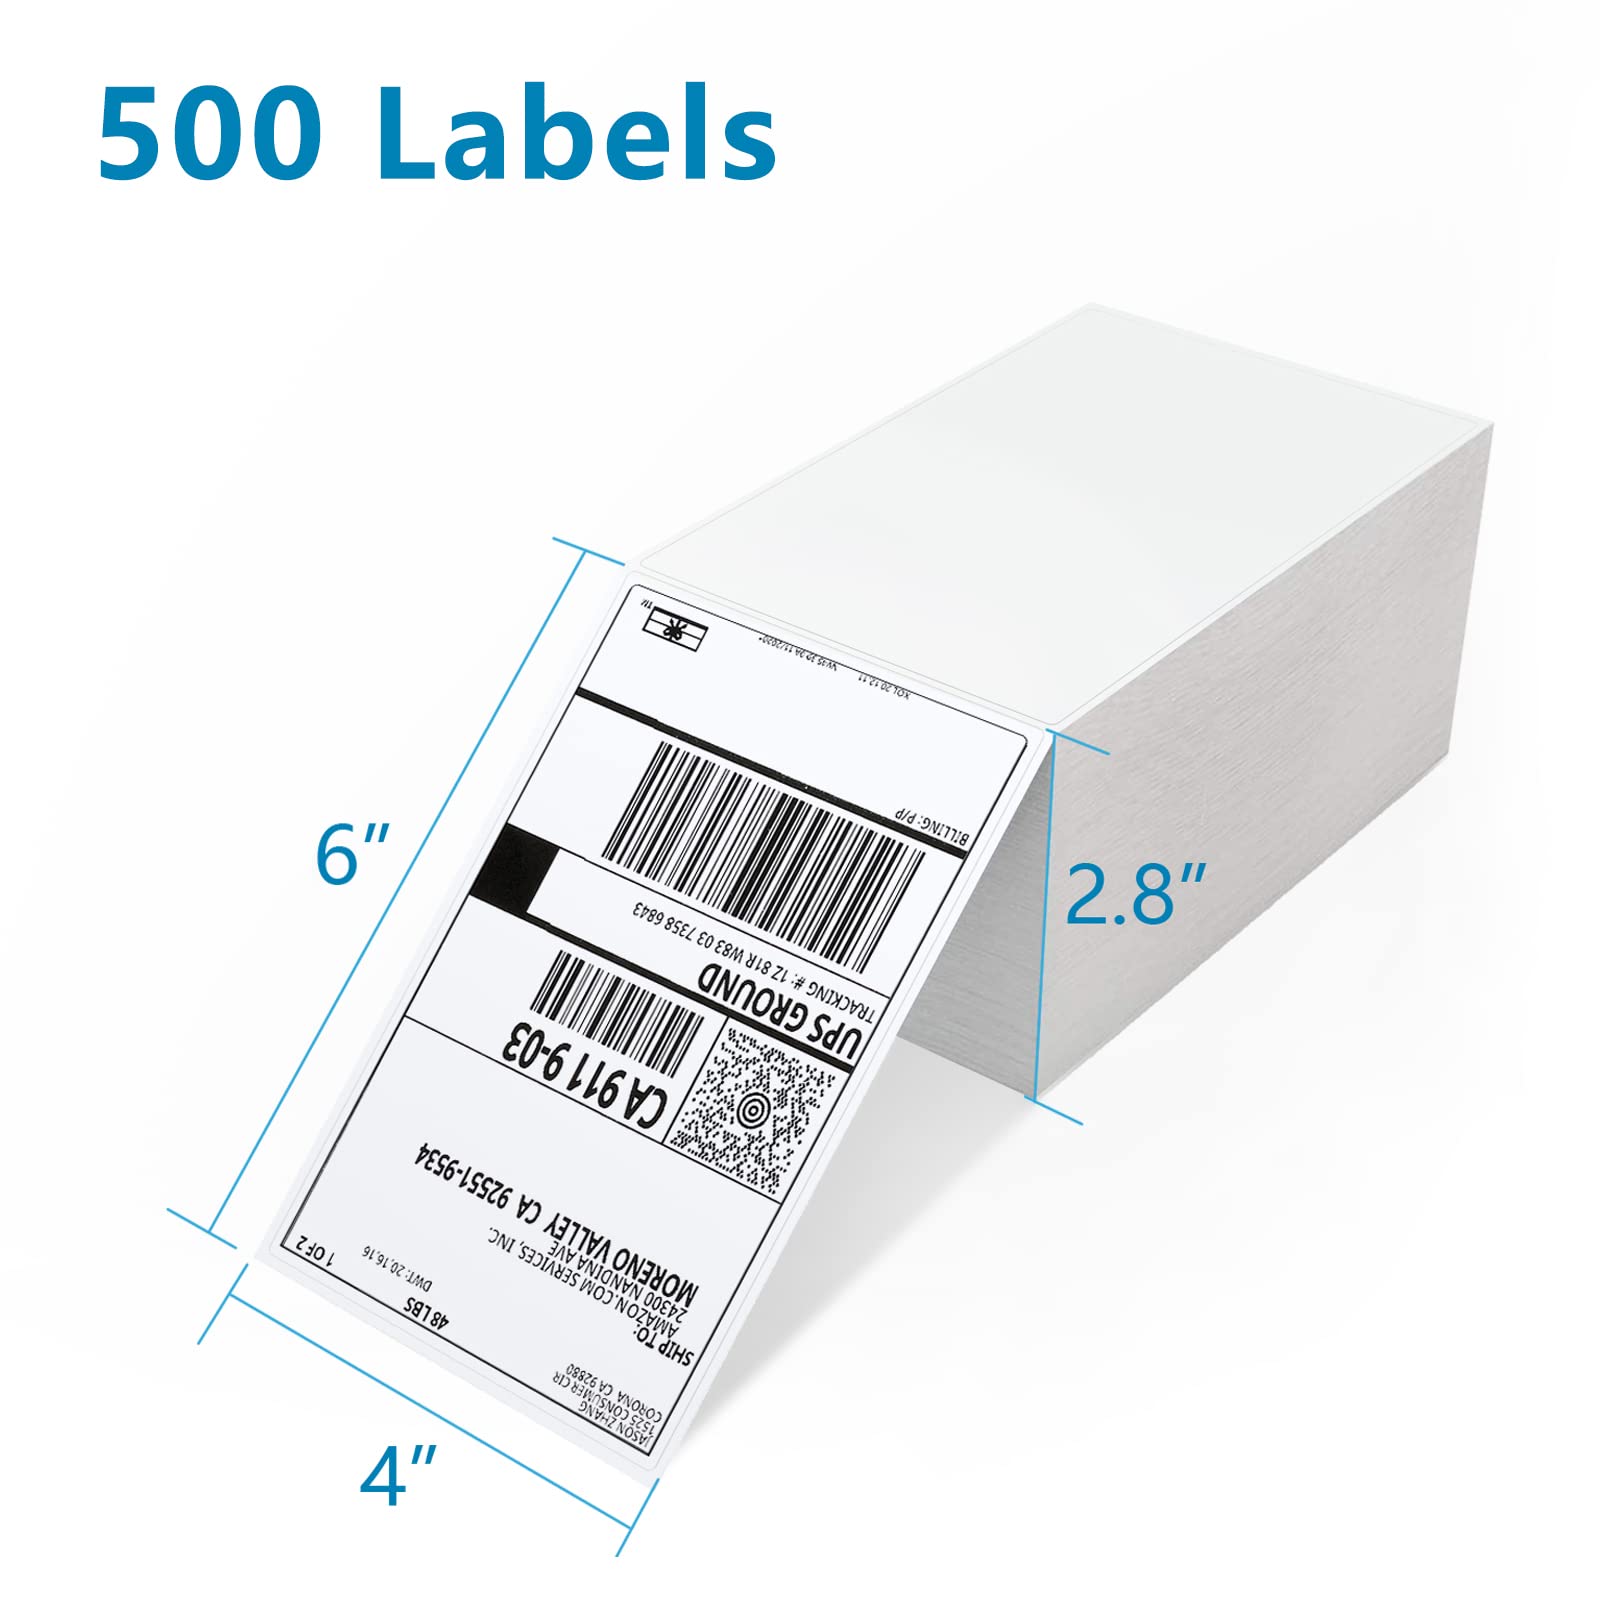 JADENS Pink Bluetooth Thermal Label Printer & 1Pack Thermal Labels